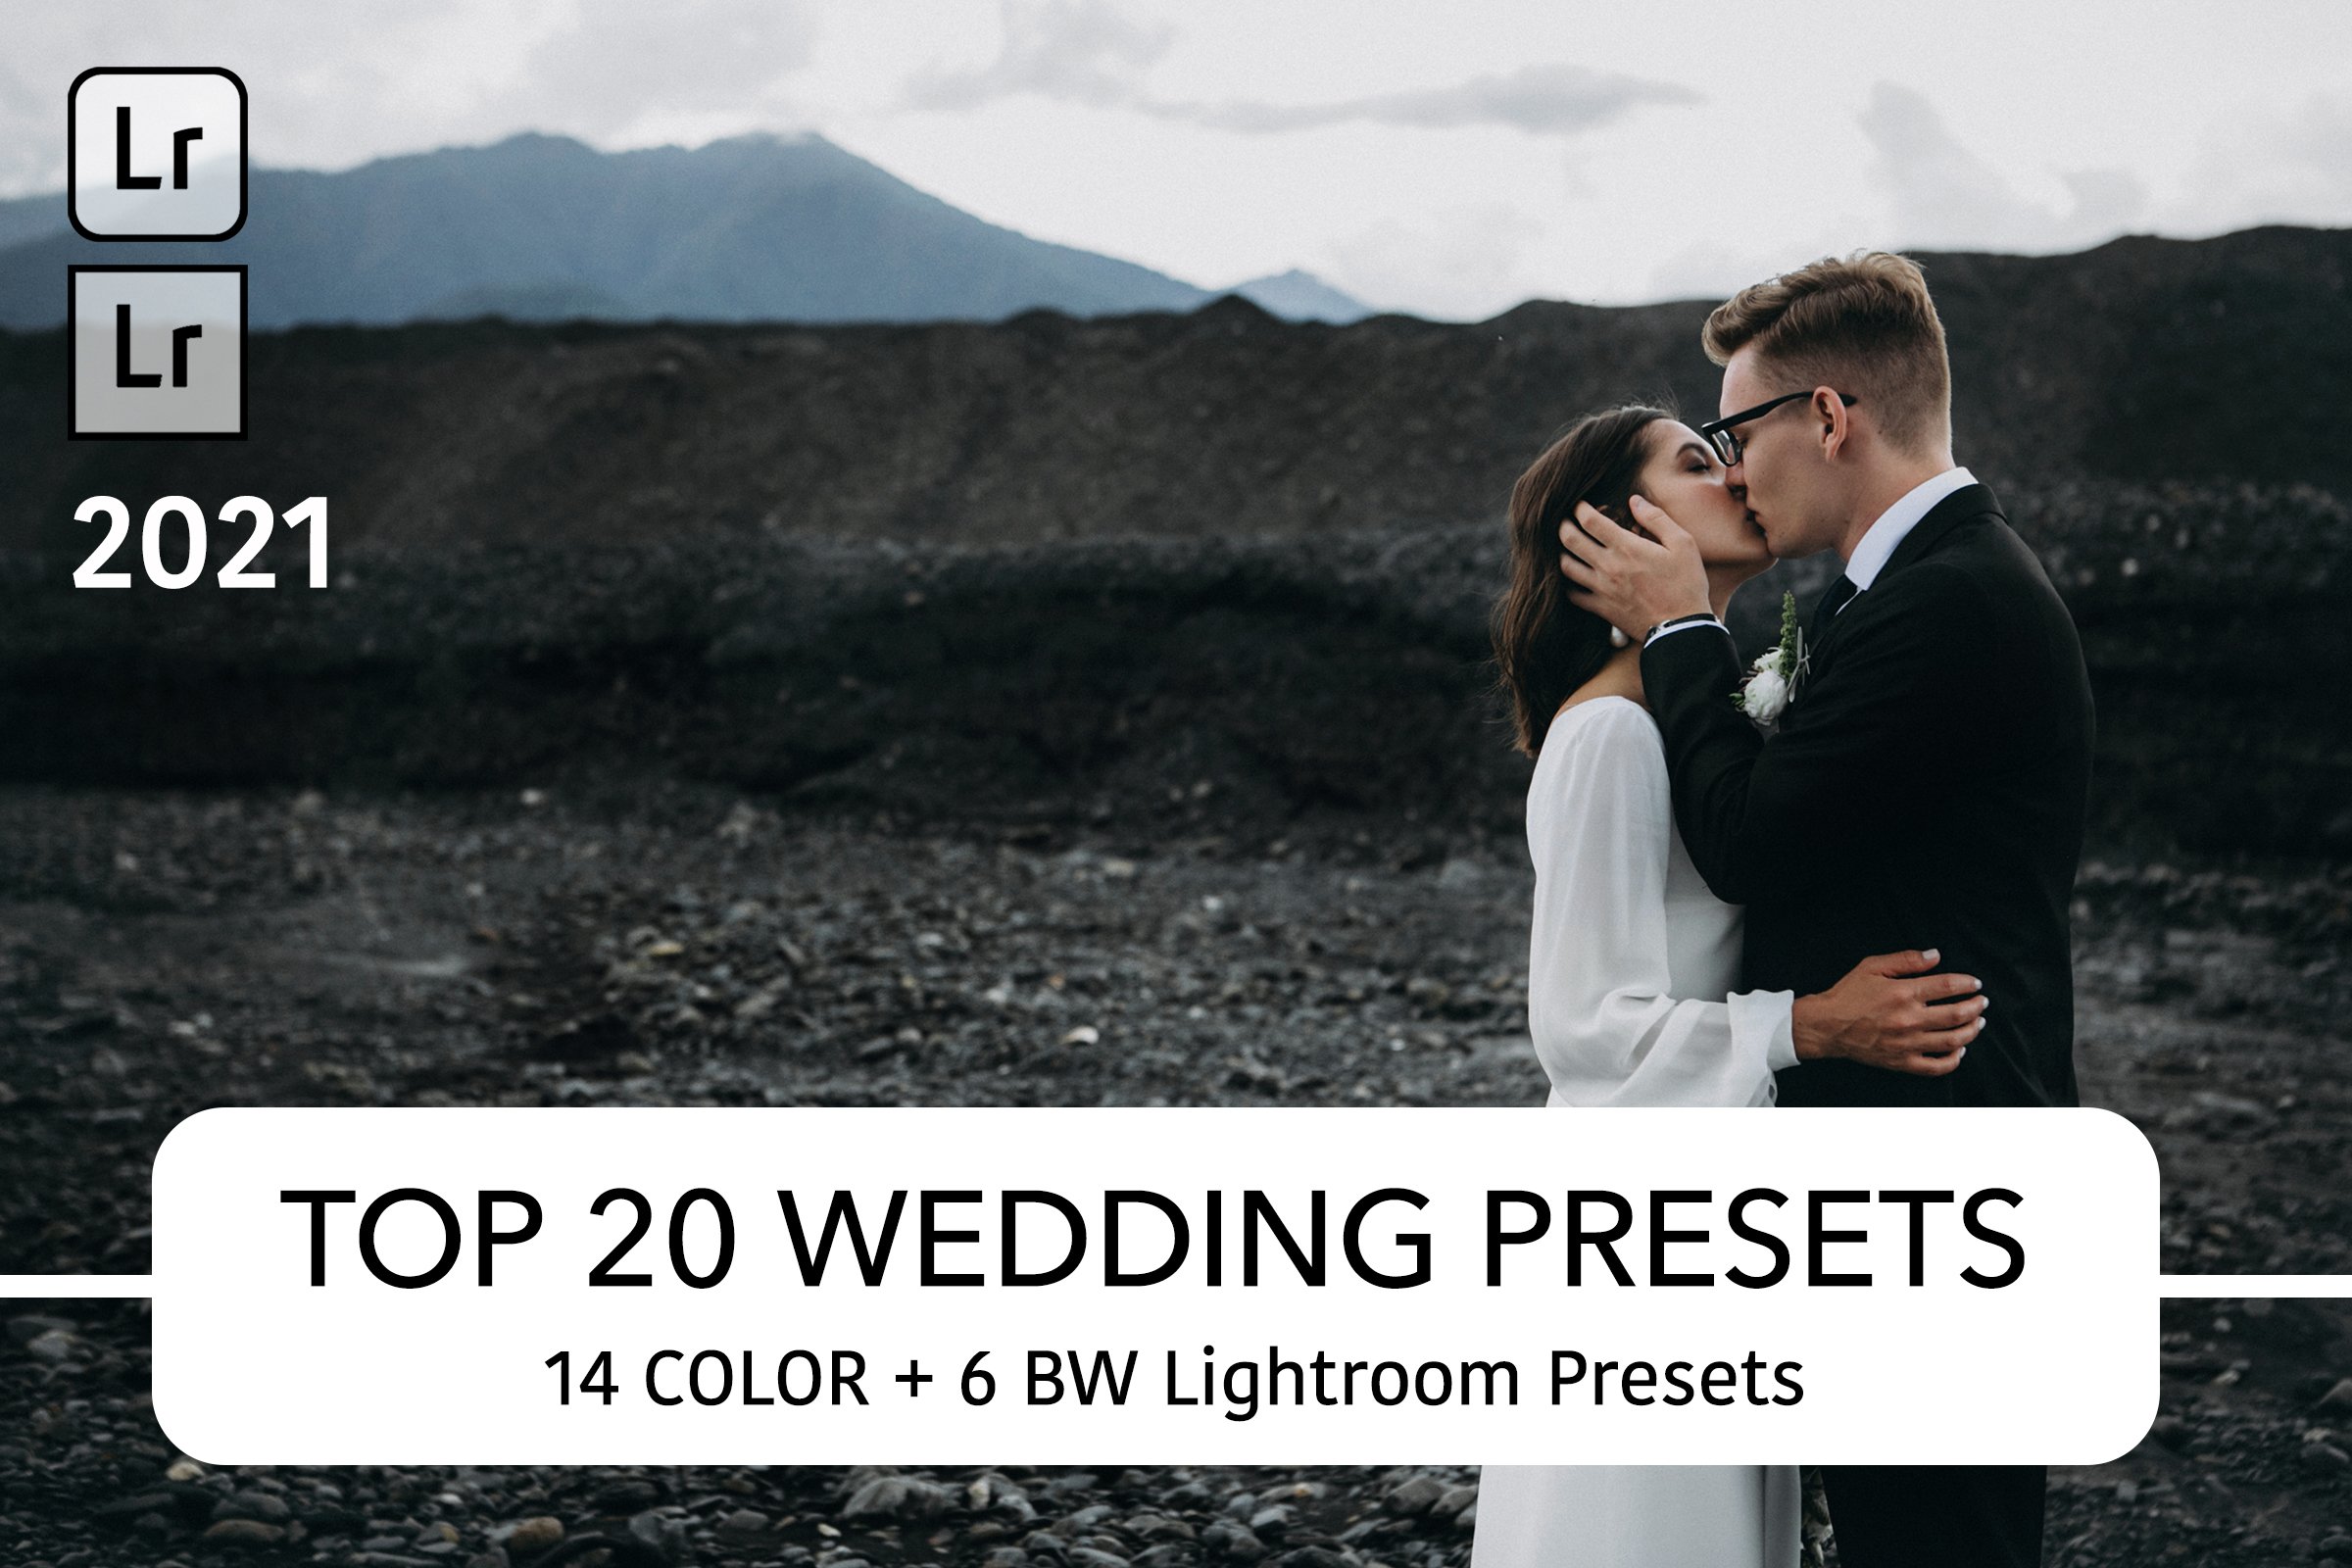 TOP 20 Lightroom Wedding Presetscover image.